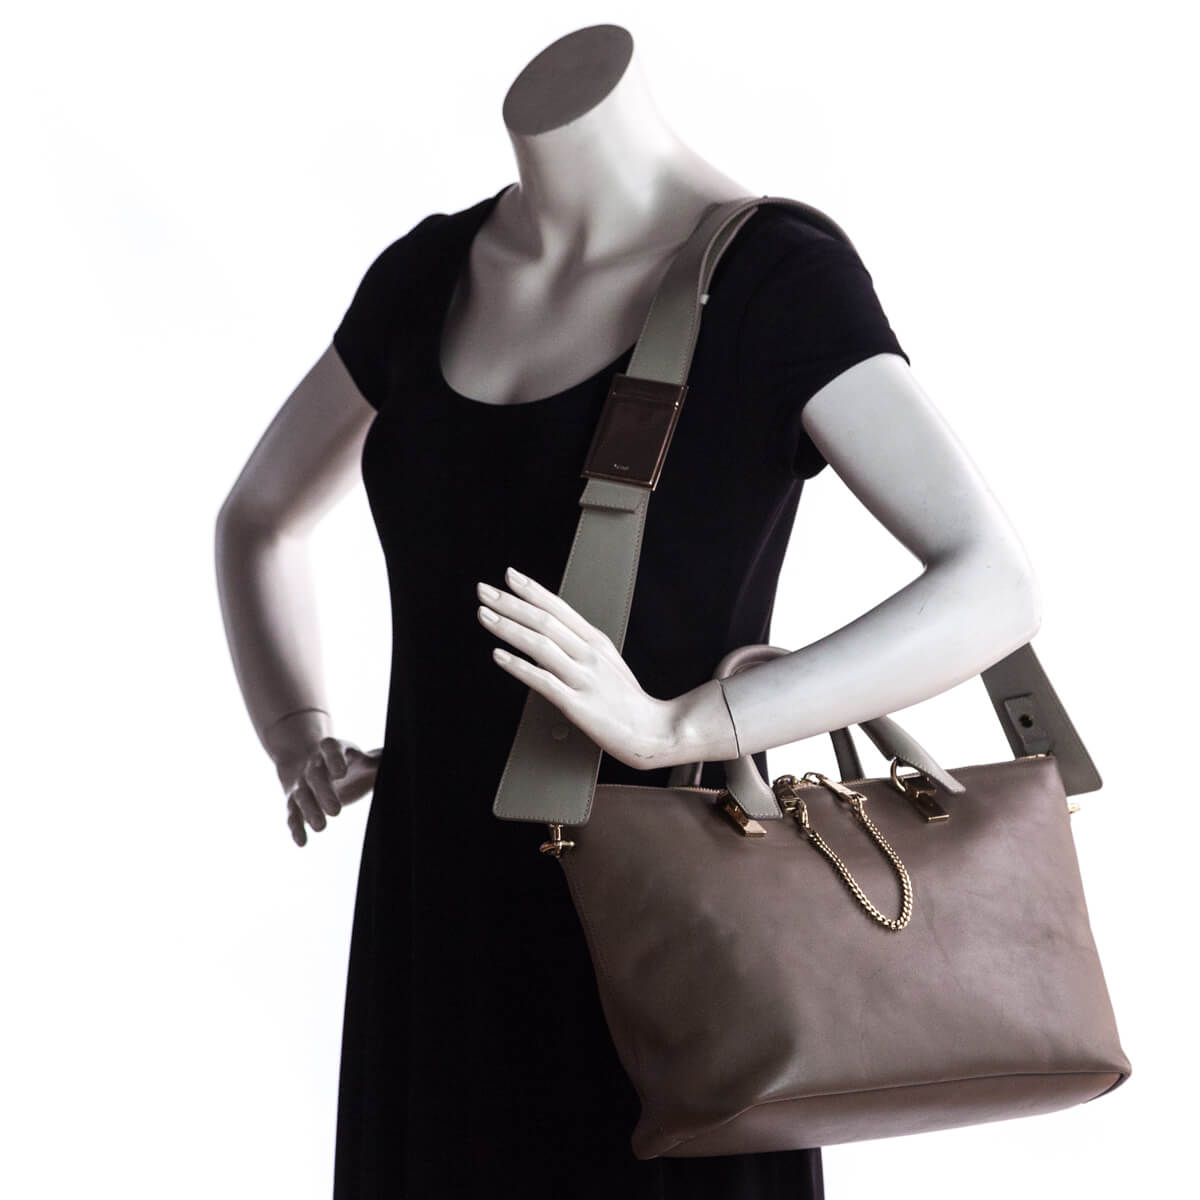 Chloe Two-Tone Taupe Medium Baylee Shoulder Bag - Love that Bag etc - Preowned Authentic Designer Handbags & Preloved Fashions